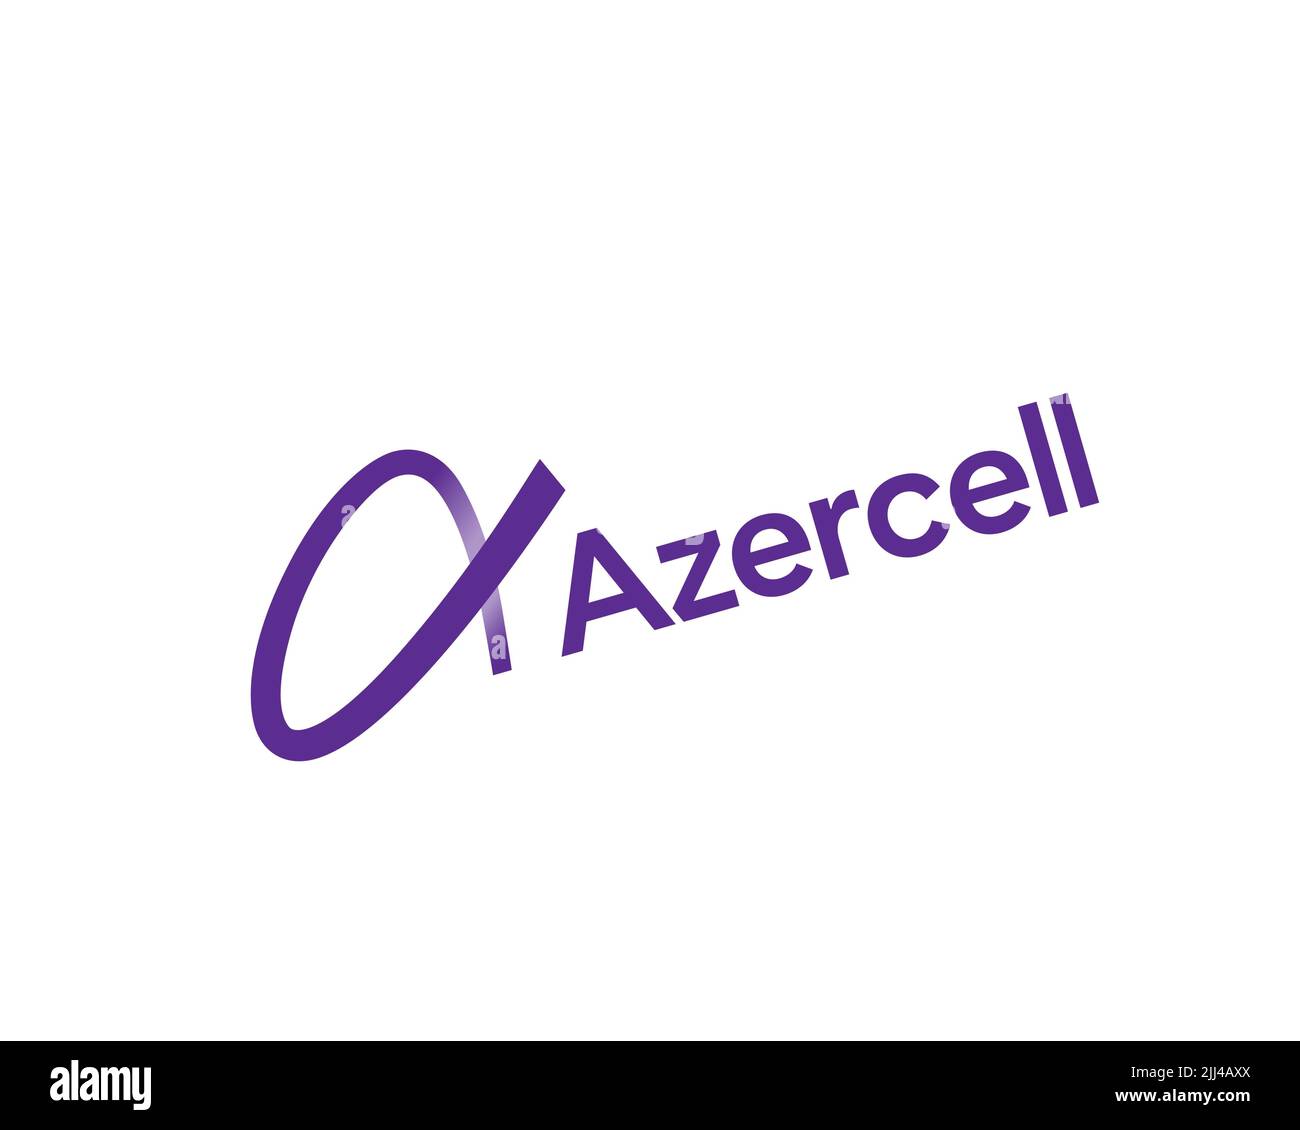 Azercell, logo ruotato, sfondo bianco Foto Stock